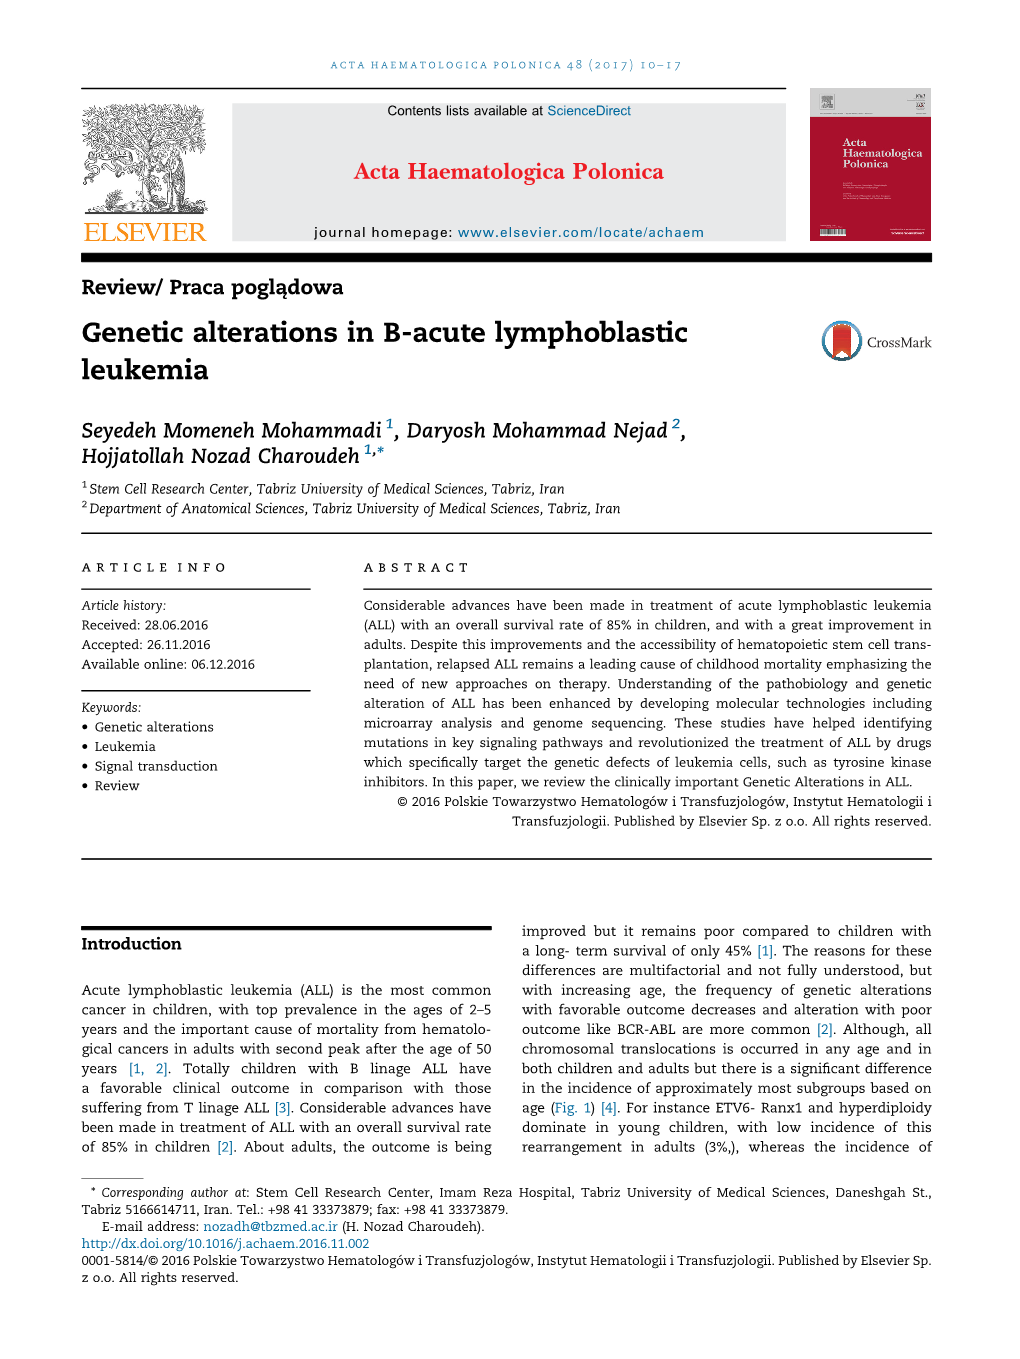 Genetic Alterations in B-Acute Lymphoblastic Leukemia